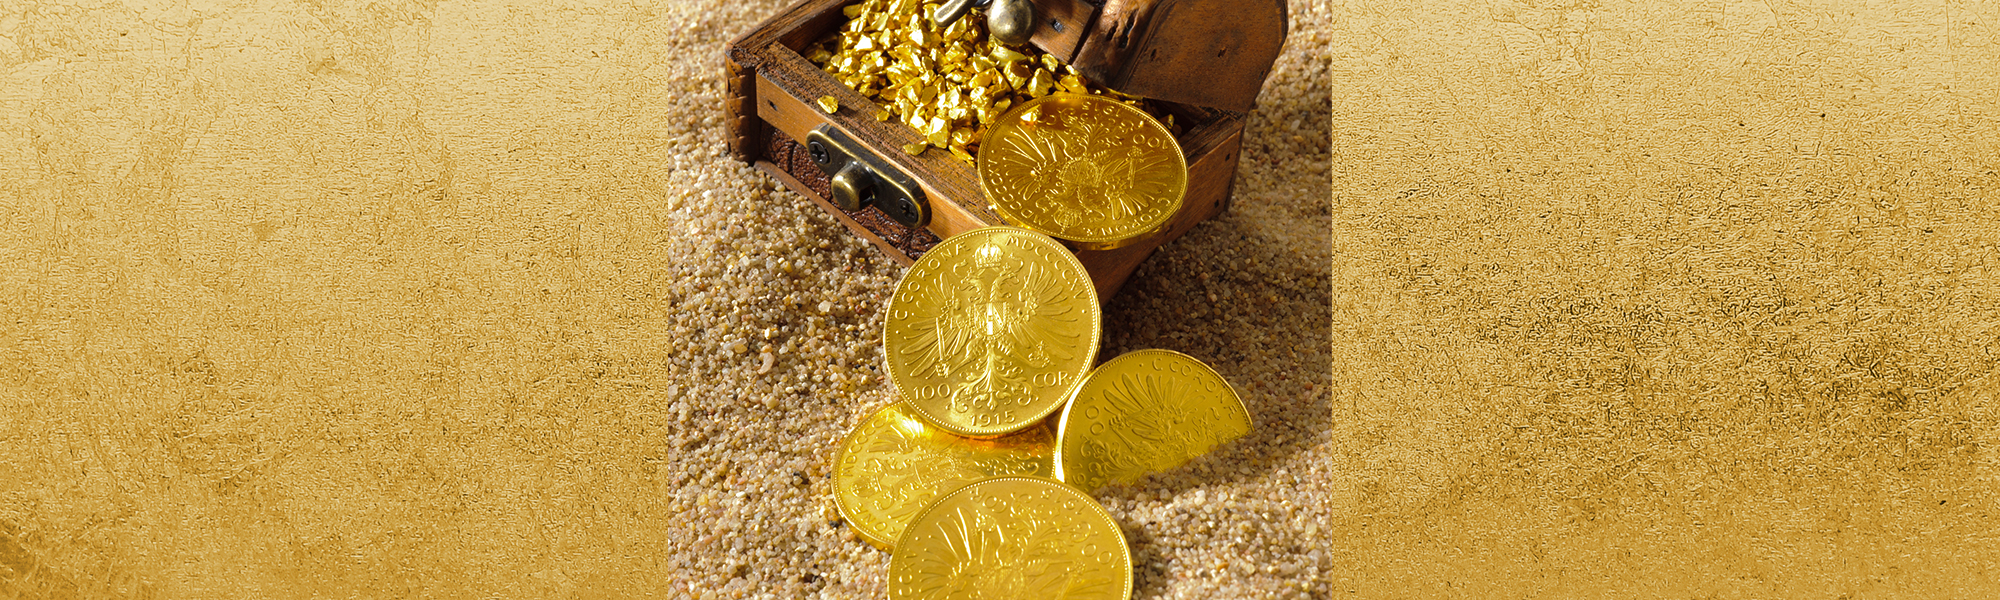 DIY Gold Bars Pirate bullion treasure prop 